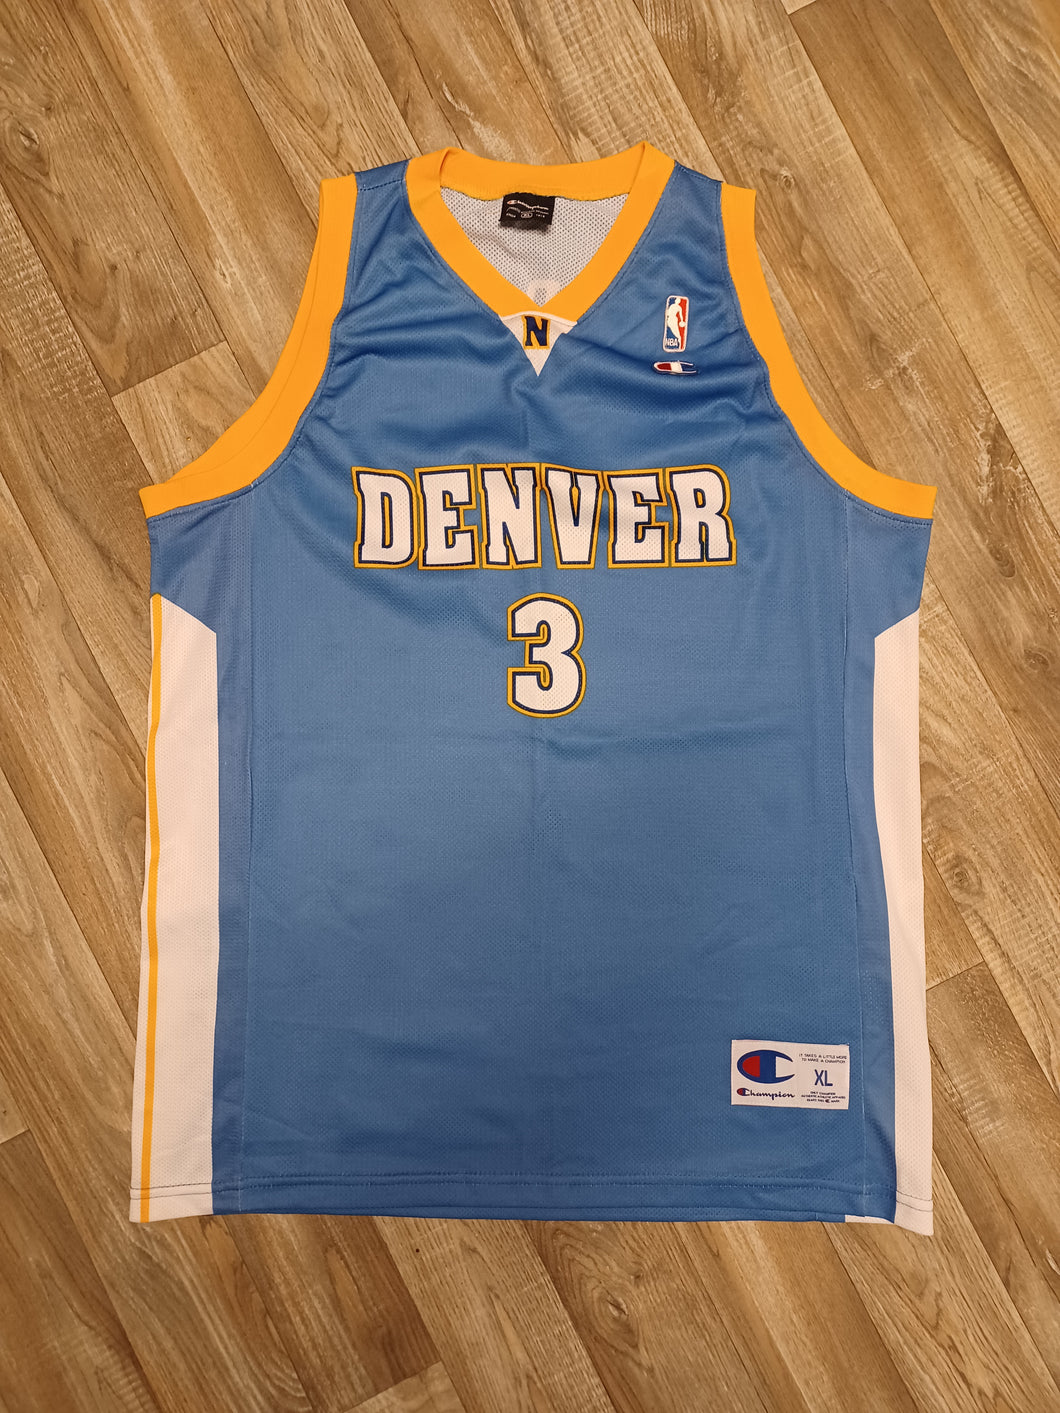 Allen Iverson Denver Nuggets Jersey Size XL